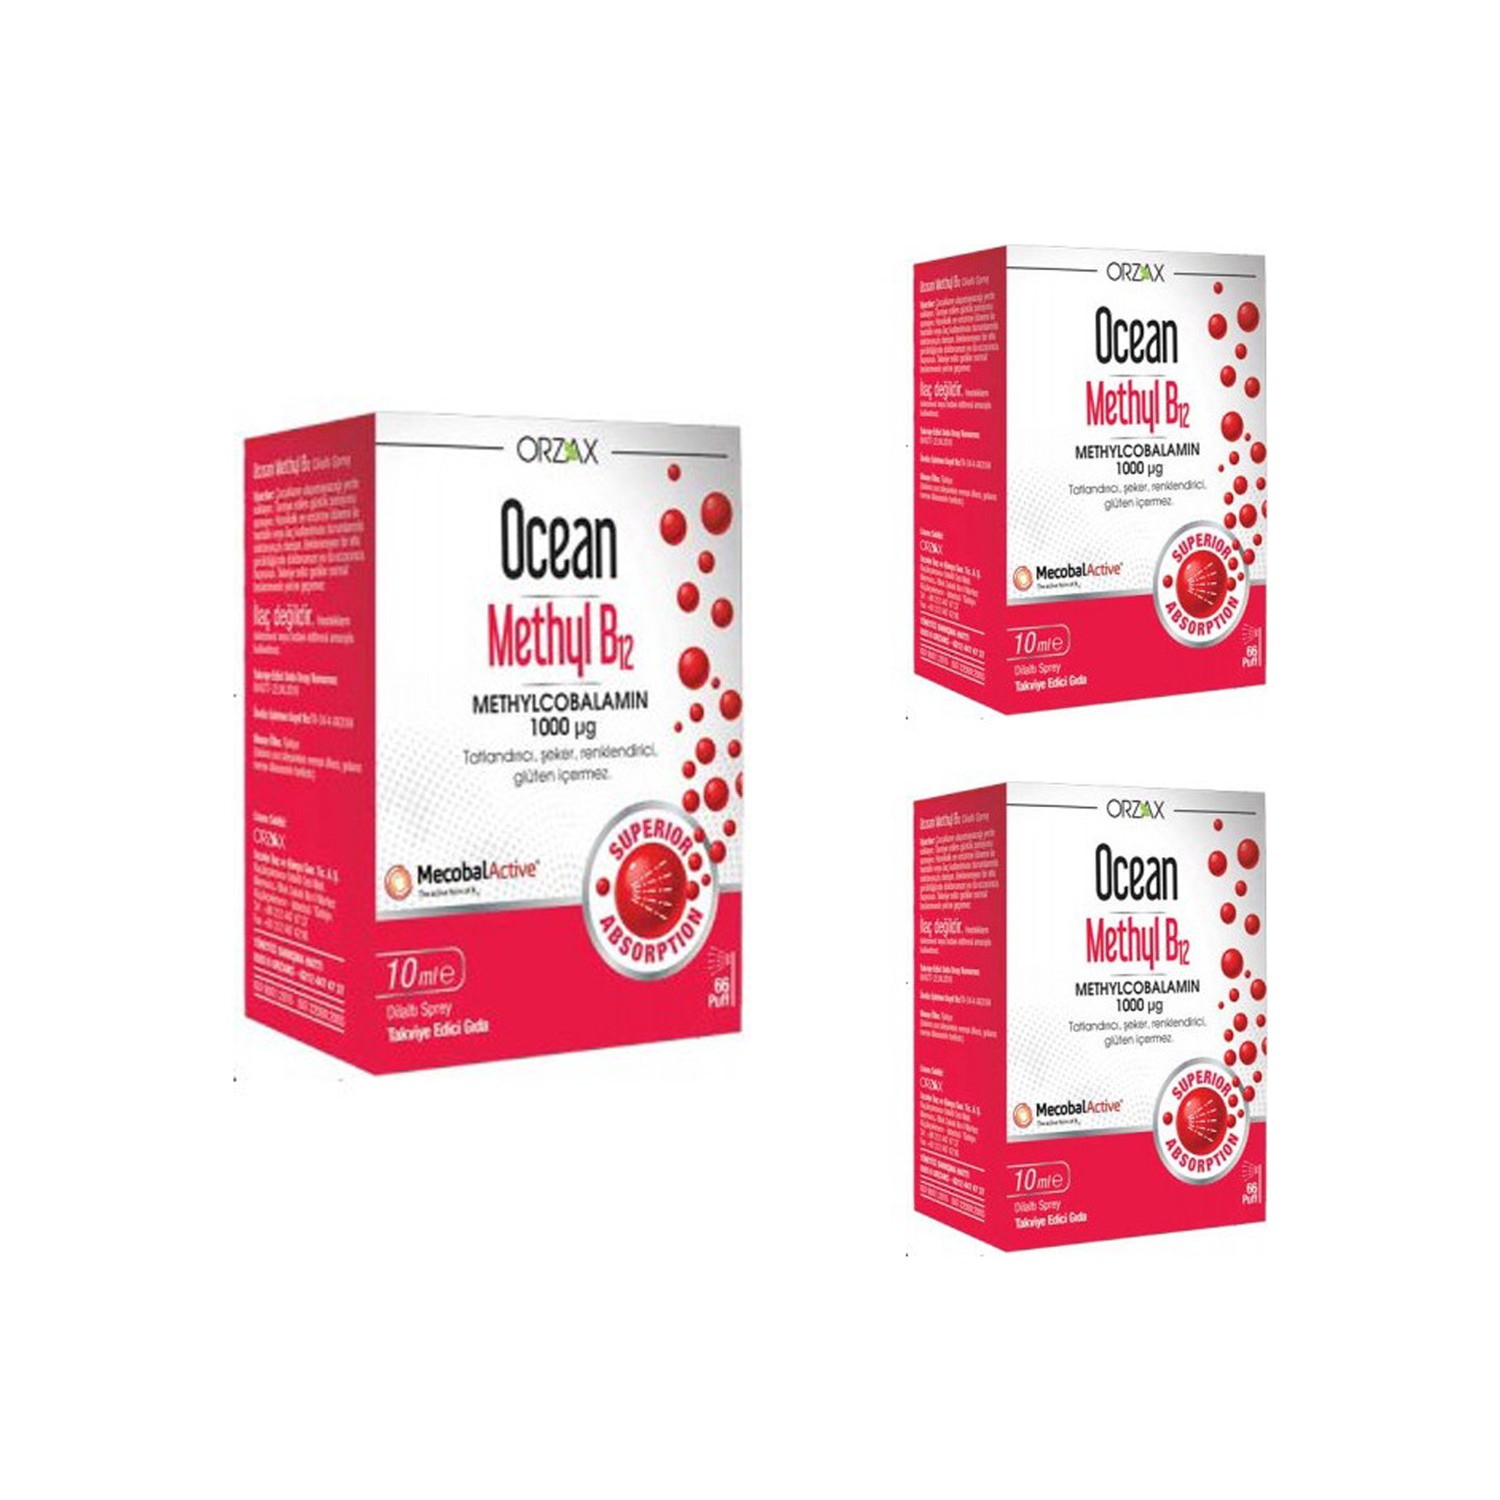 Спрей Orzax Ocean Methyl B12 1000 мкг, 3 упаковки по 10 мл цена и фото